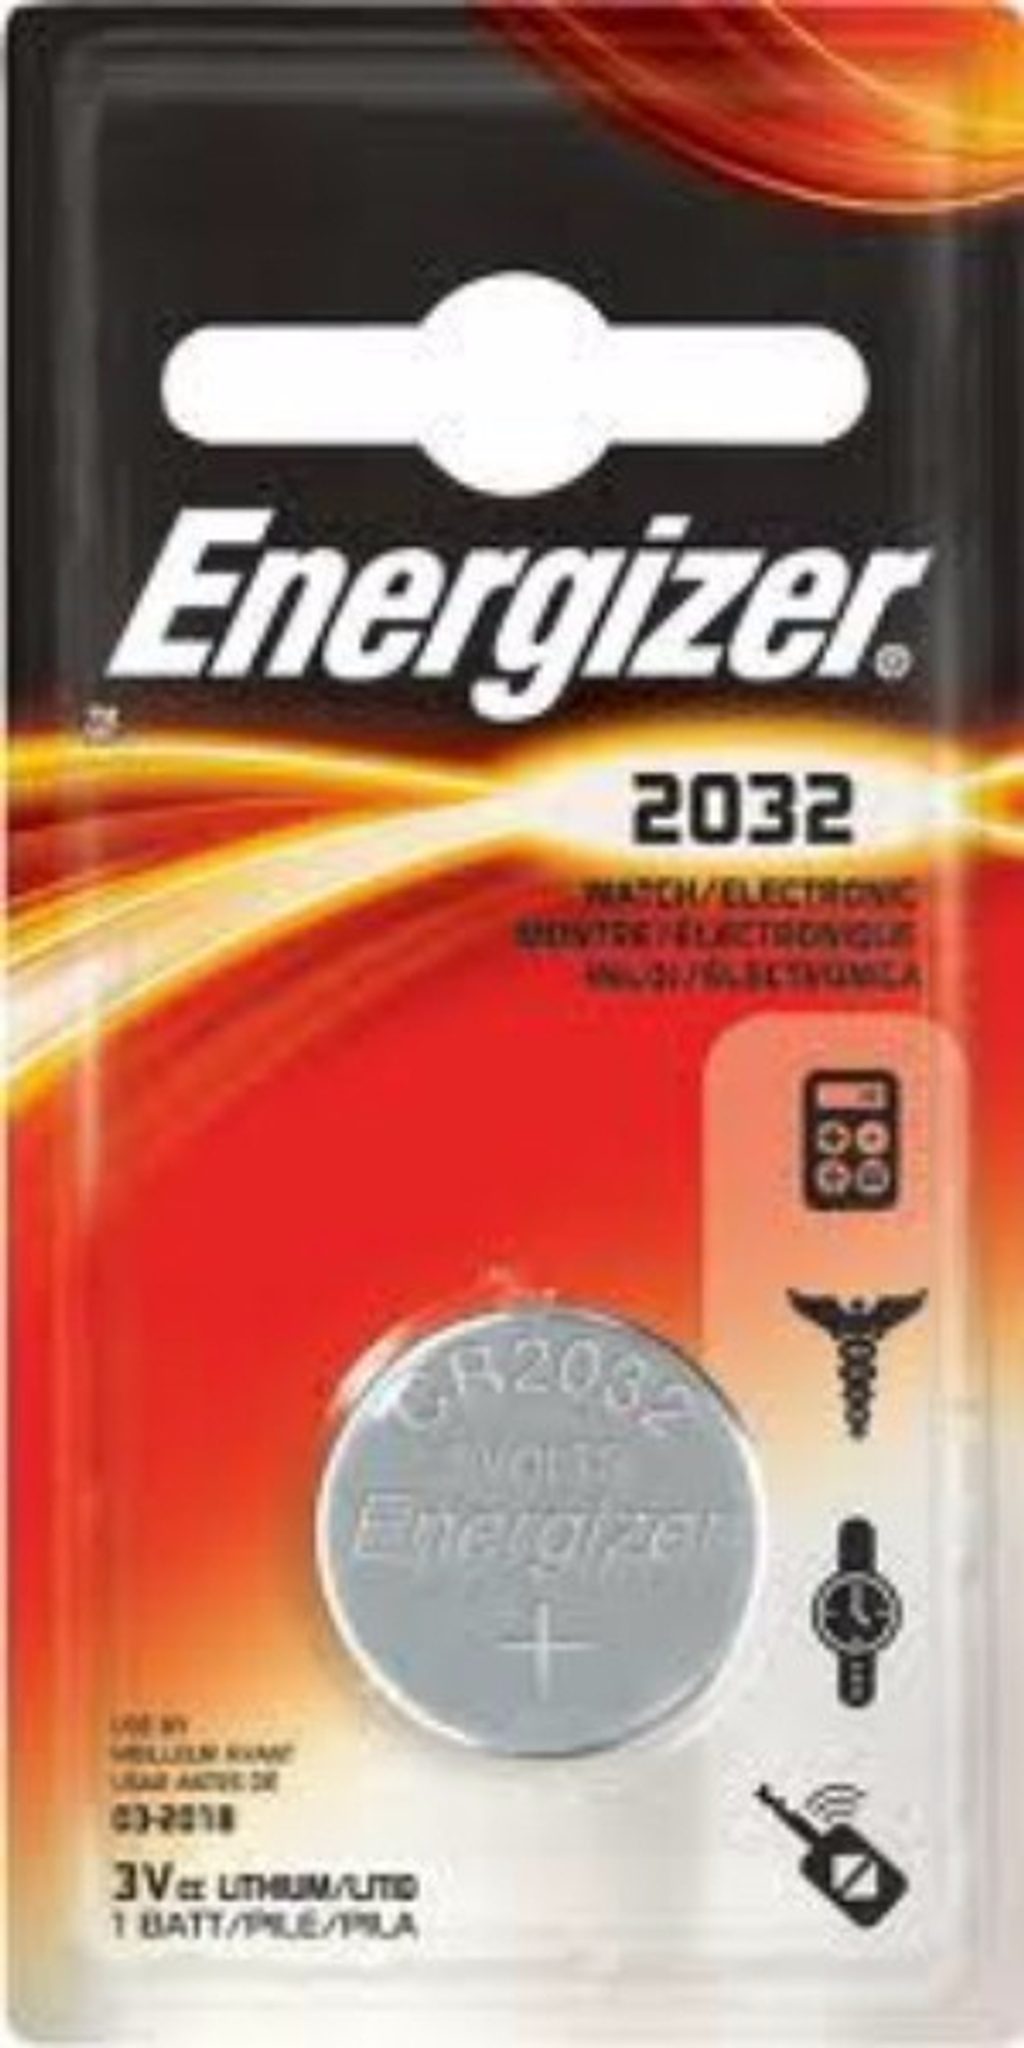 Baterie CR2032 Energizer